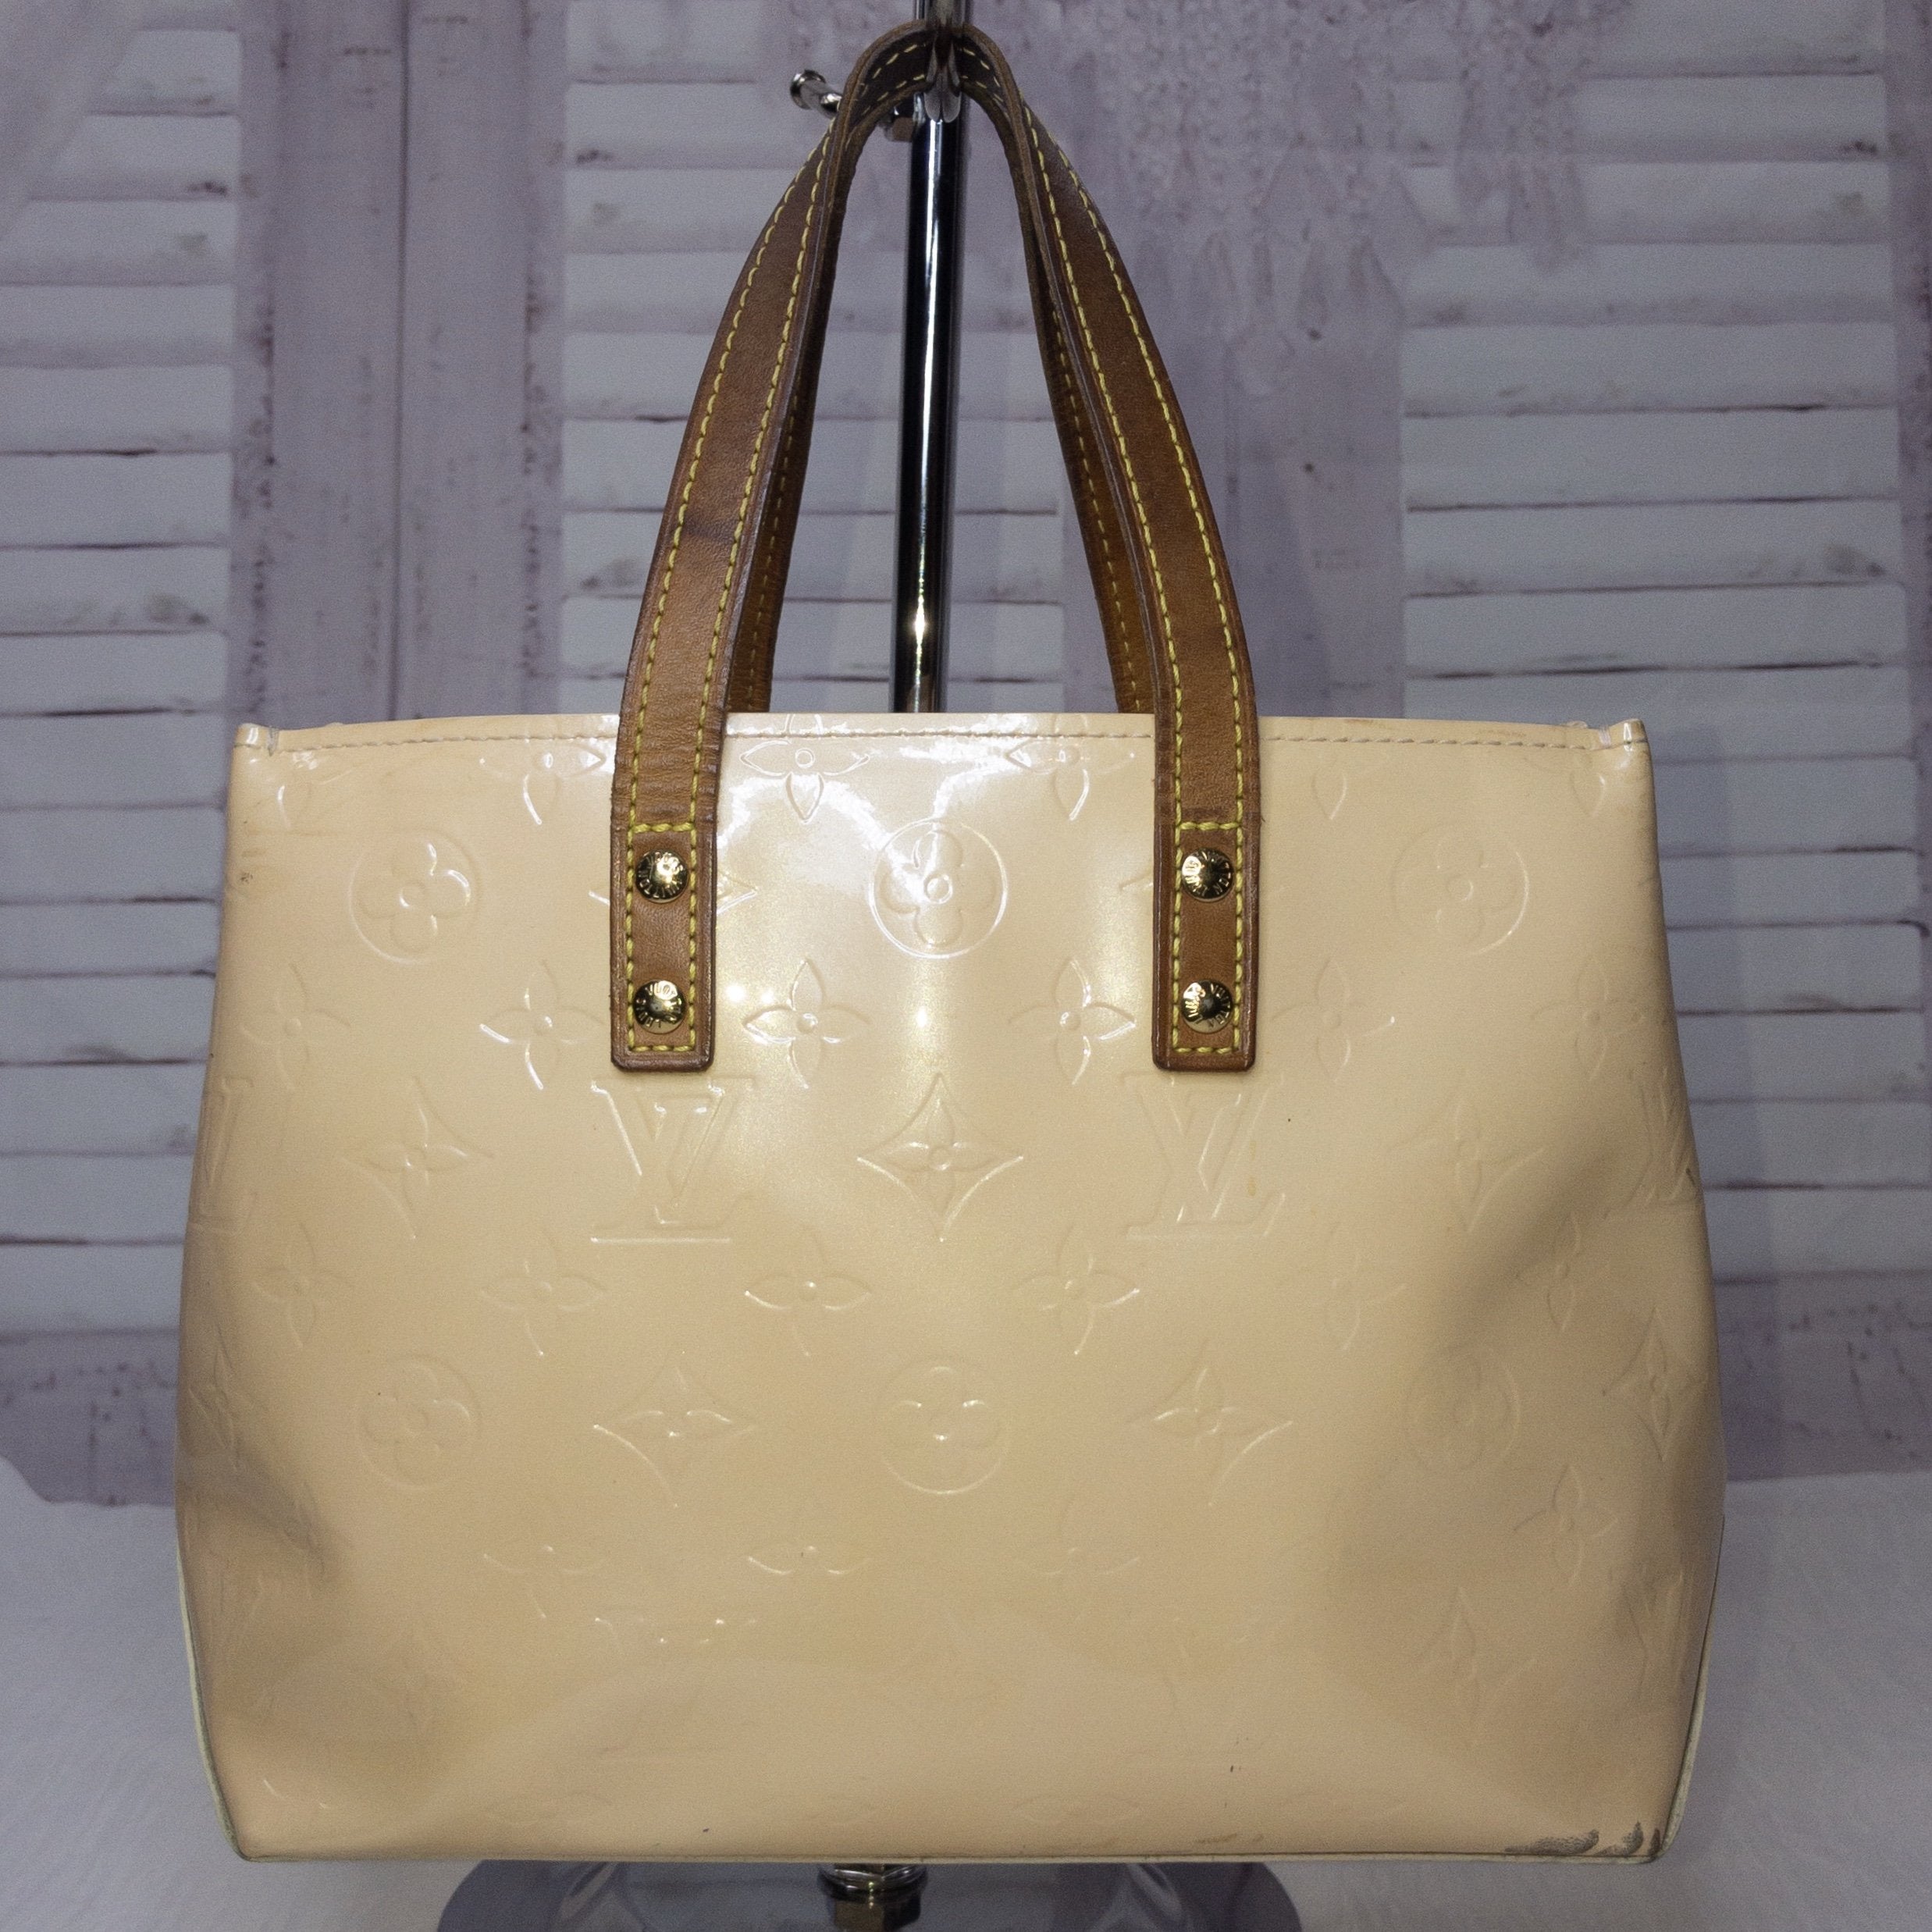 Marshmallow cloth handbag